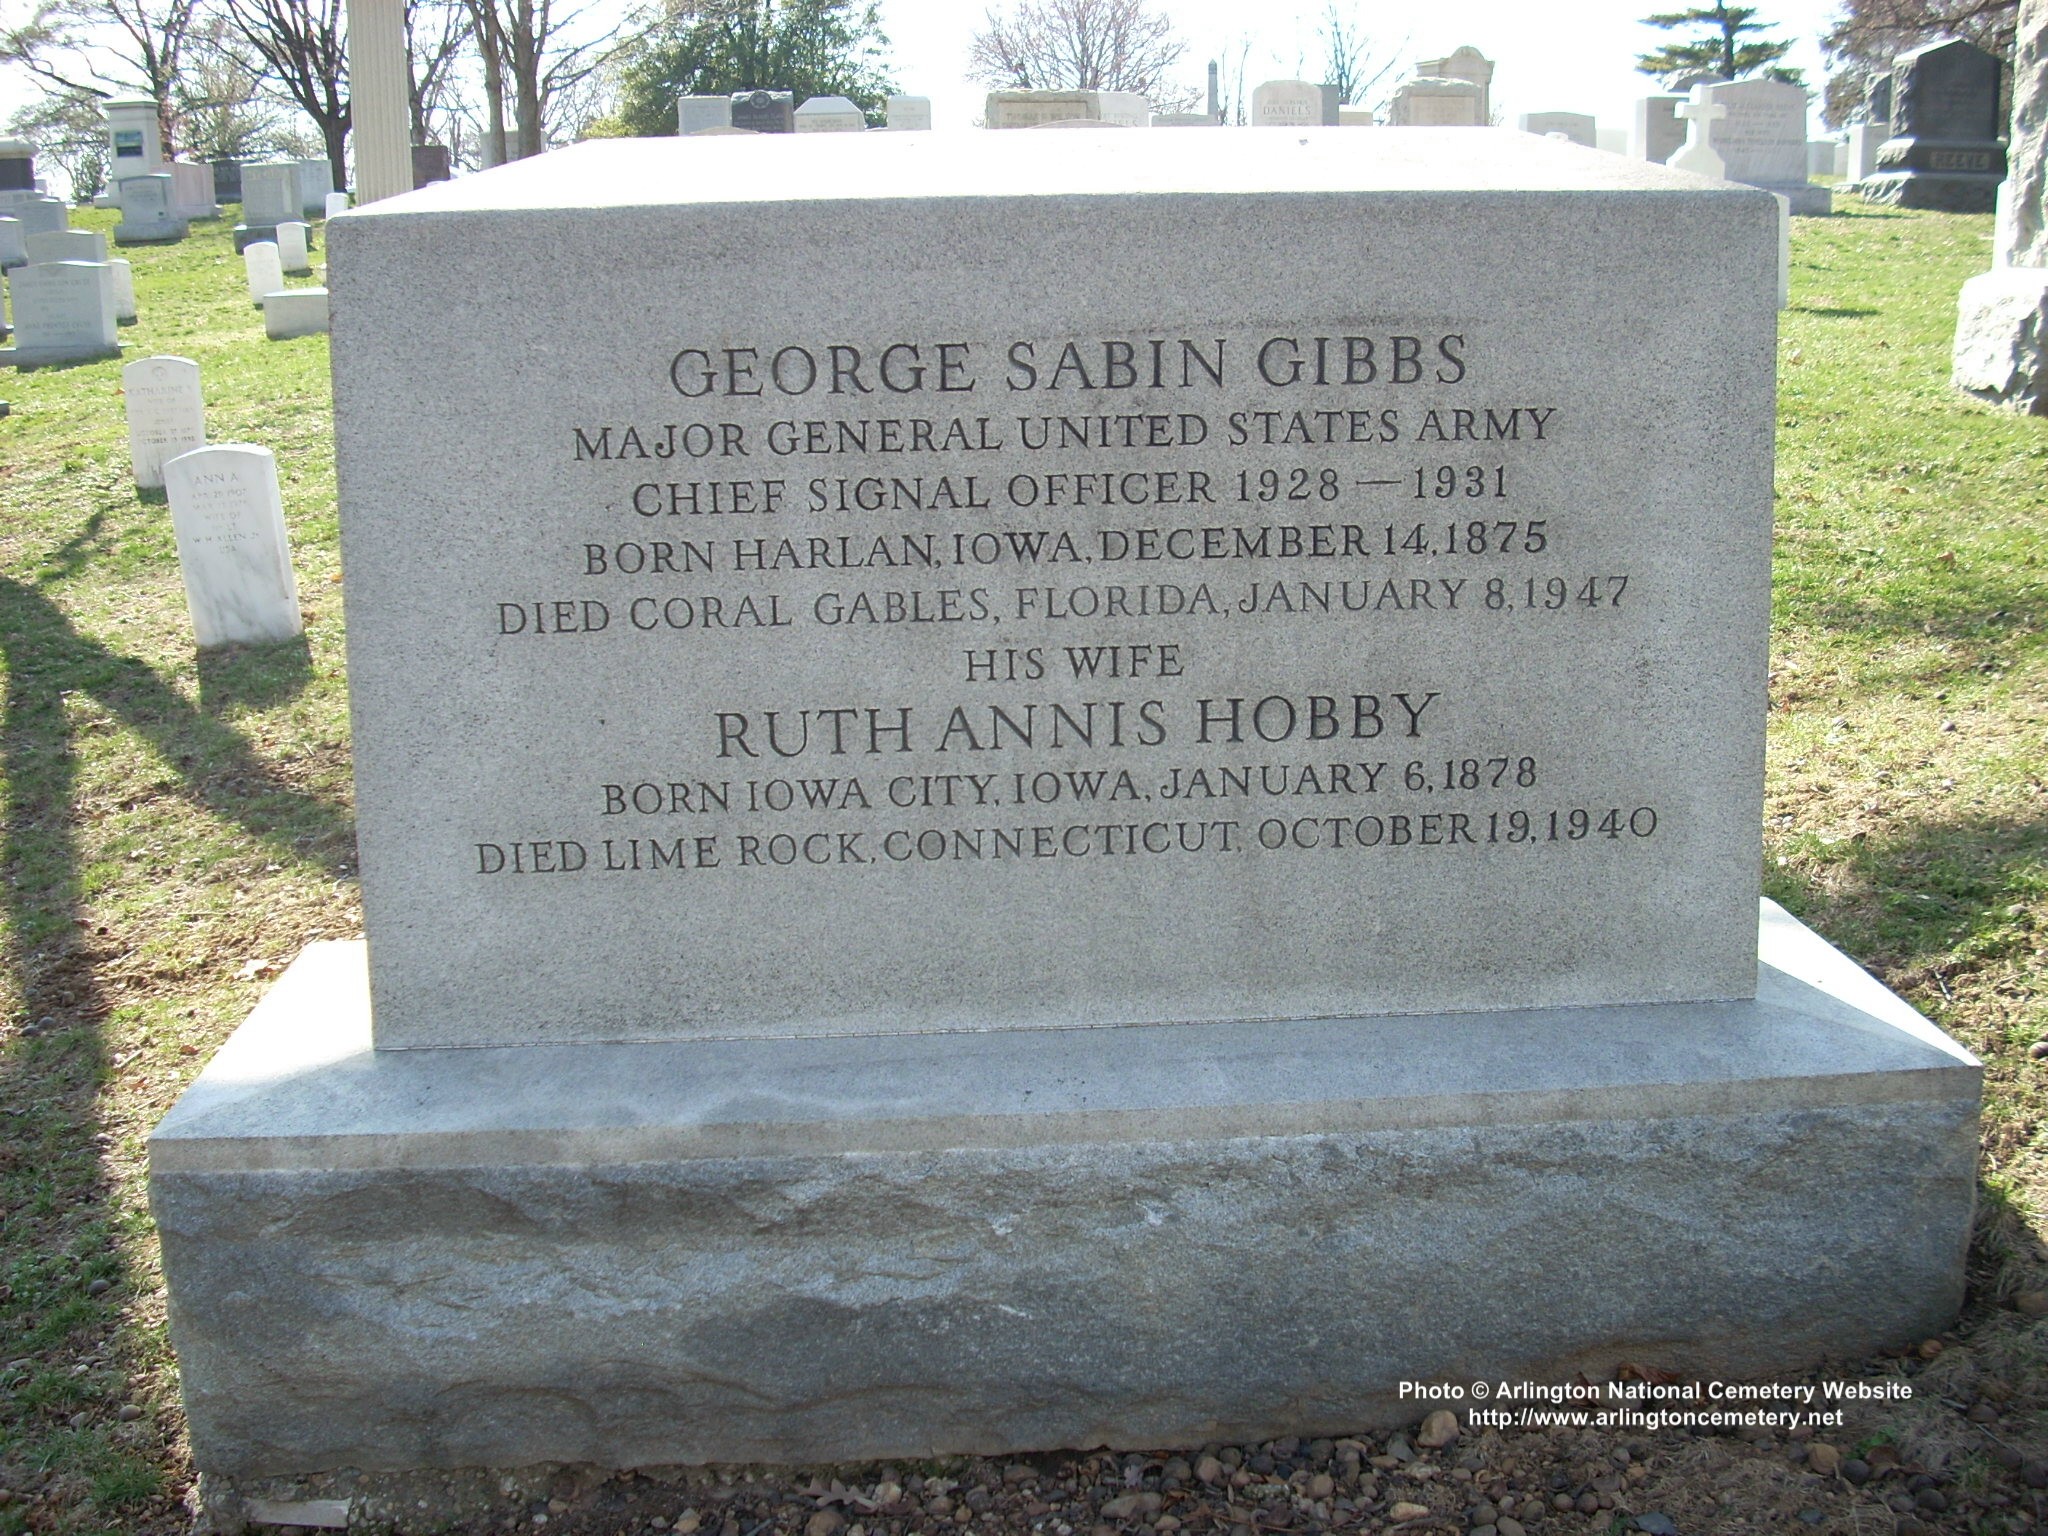 gsgibbs-gravesite-photo-march-2008-004